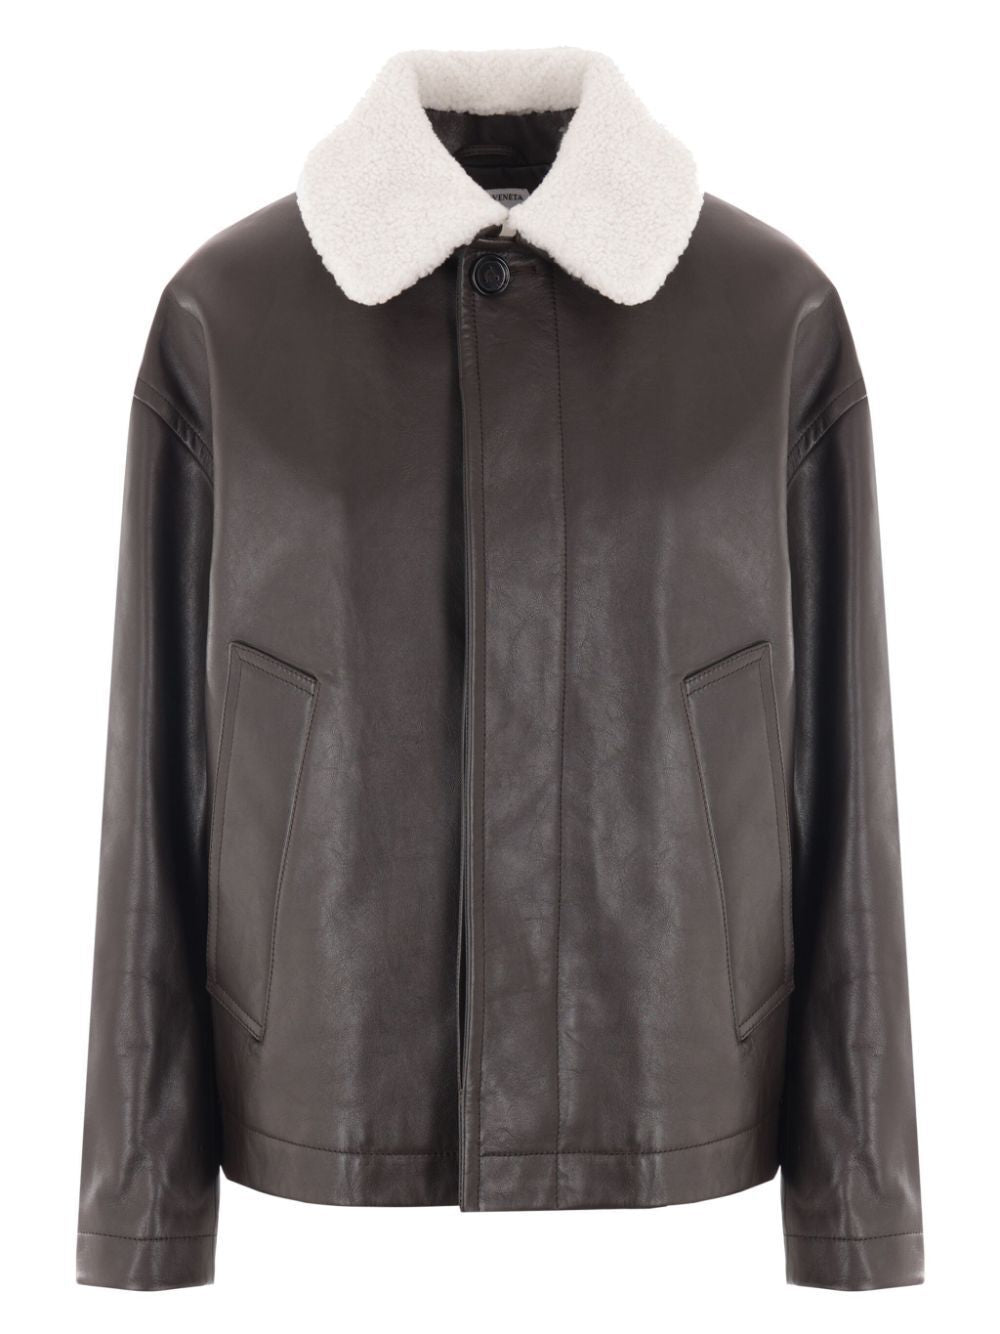 BOTTEGA VENETA Stylish Brown Calf Leather Jacket for Women